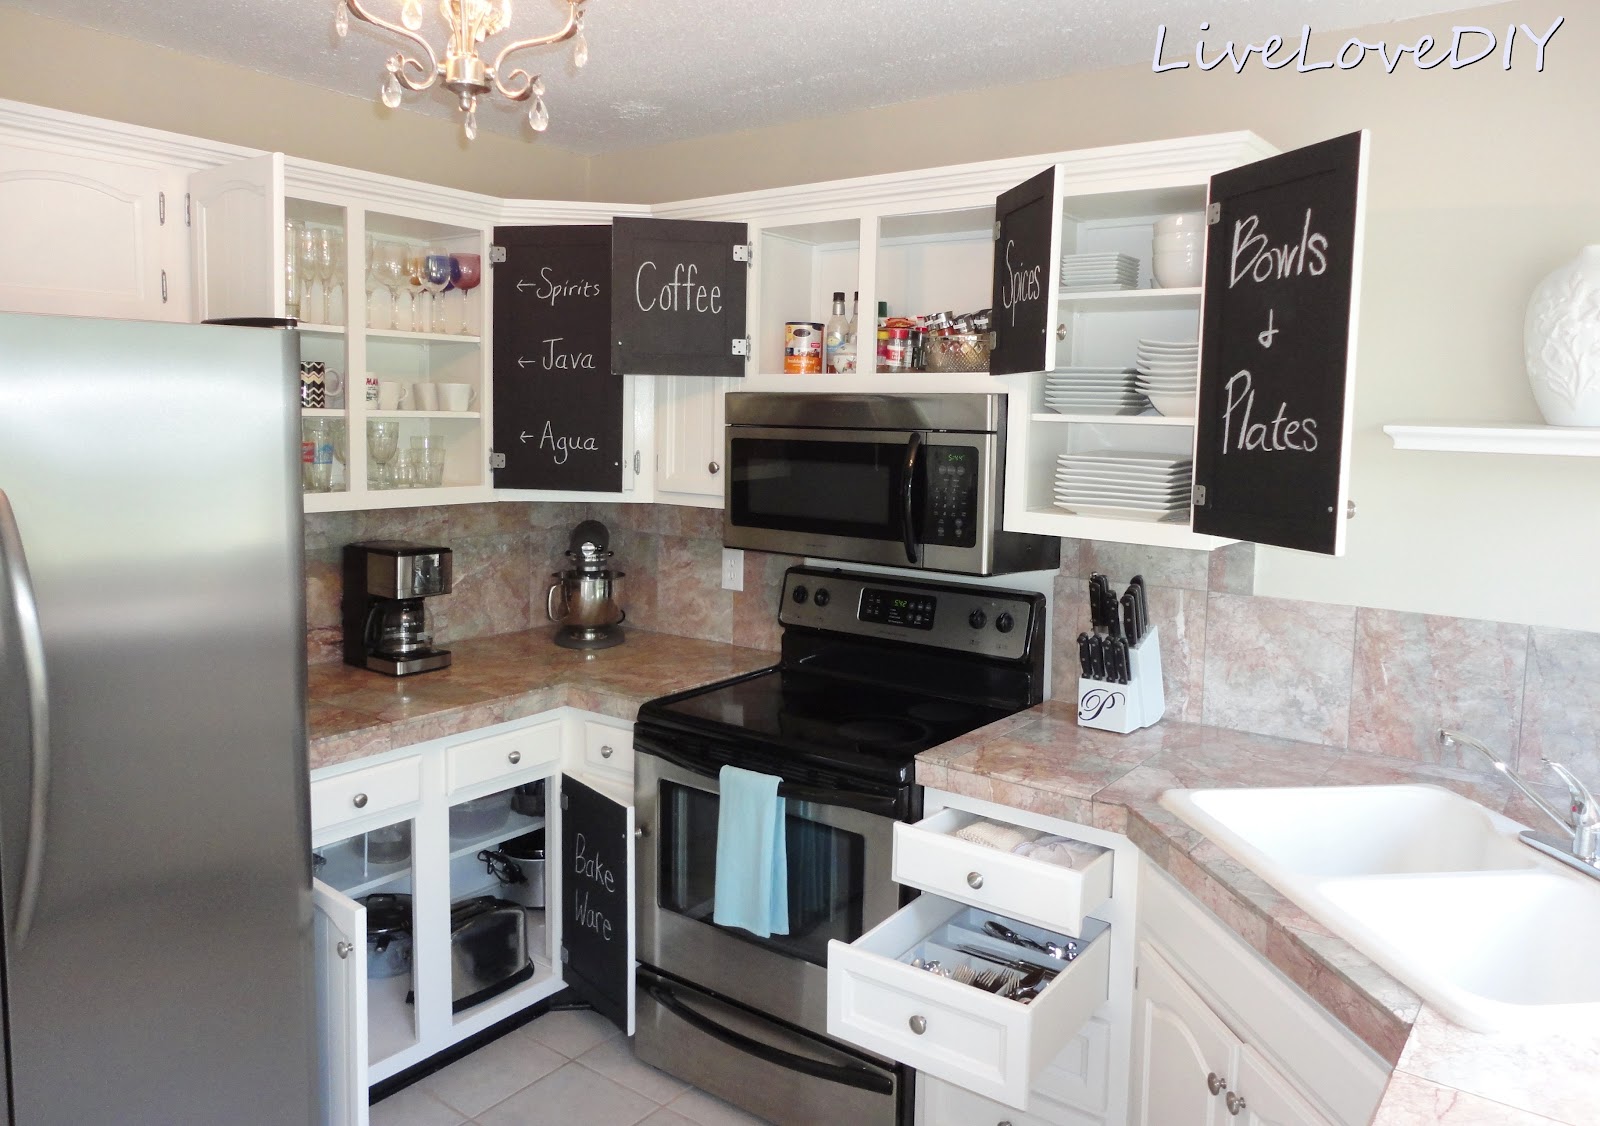  Kitchen  Cabinet  Chalk  Paint  Makeover Creative Home